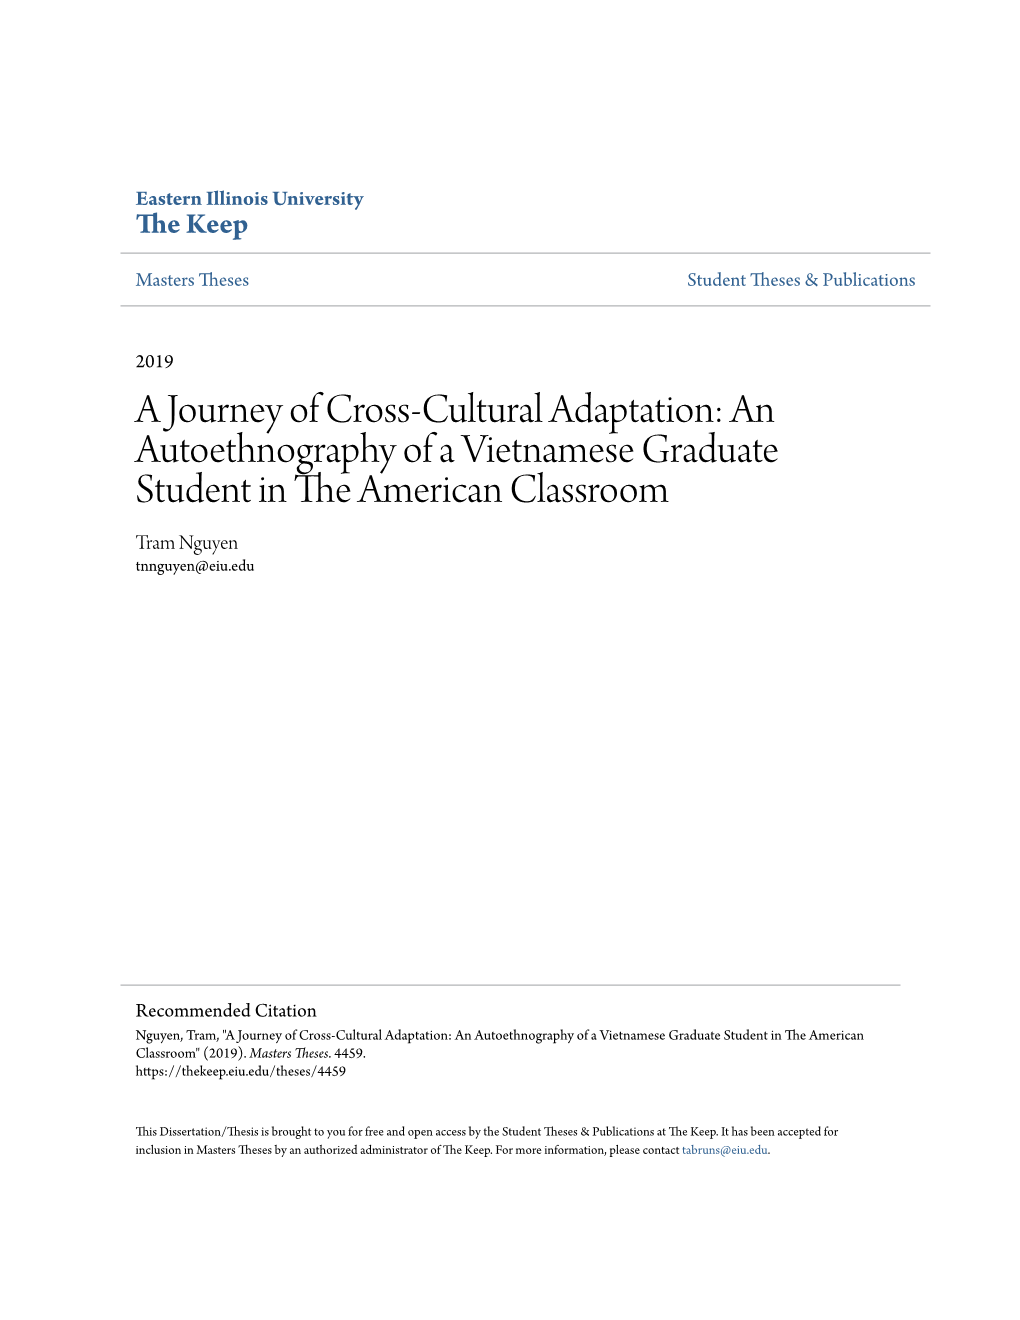 A Journey of Cross-Cultural Adaptation: an Autoethnography of a Vietnamese Graduate Student in the American Classroom Tram Nguyen Tnnguyen@Eiu.Edu